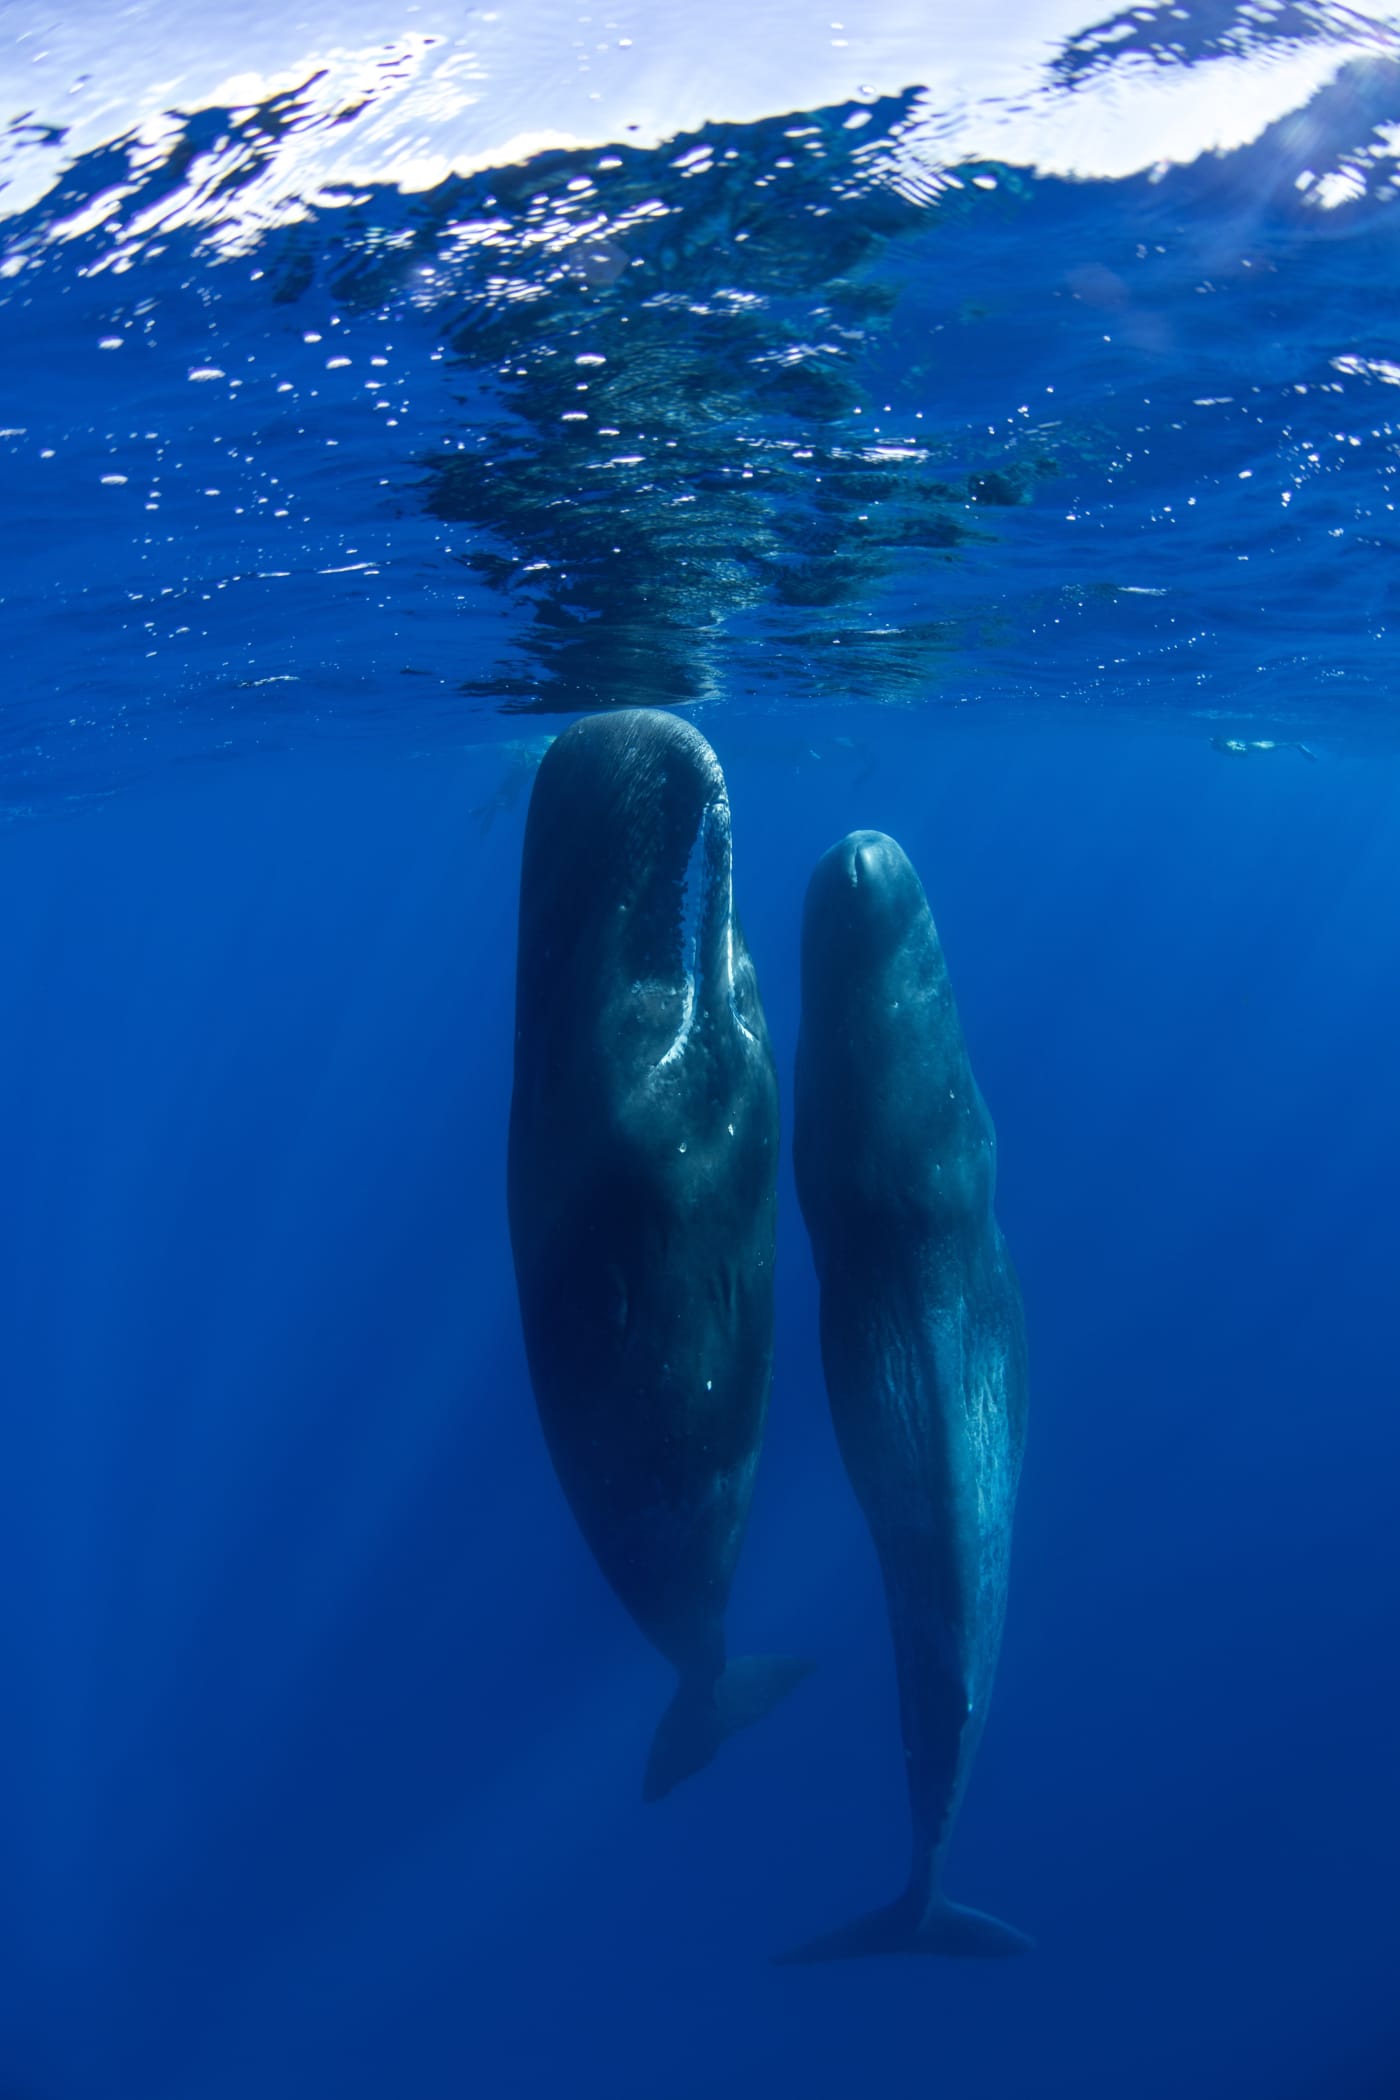 Two sperm whales (Physeter macrocephalus) sleeping vertically in the ocean.